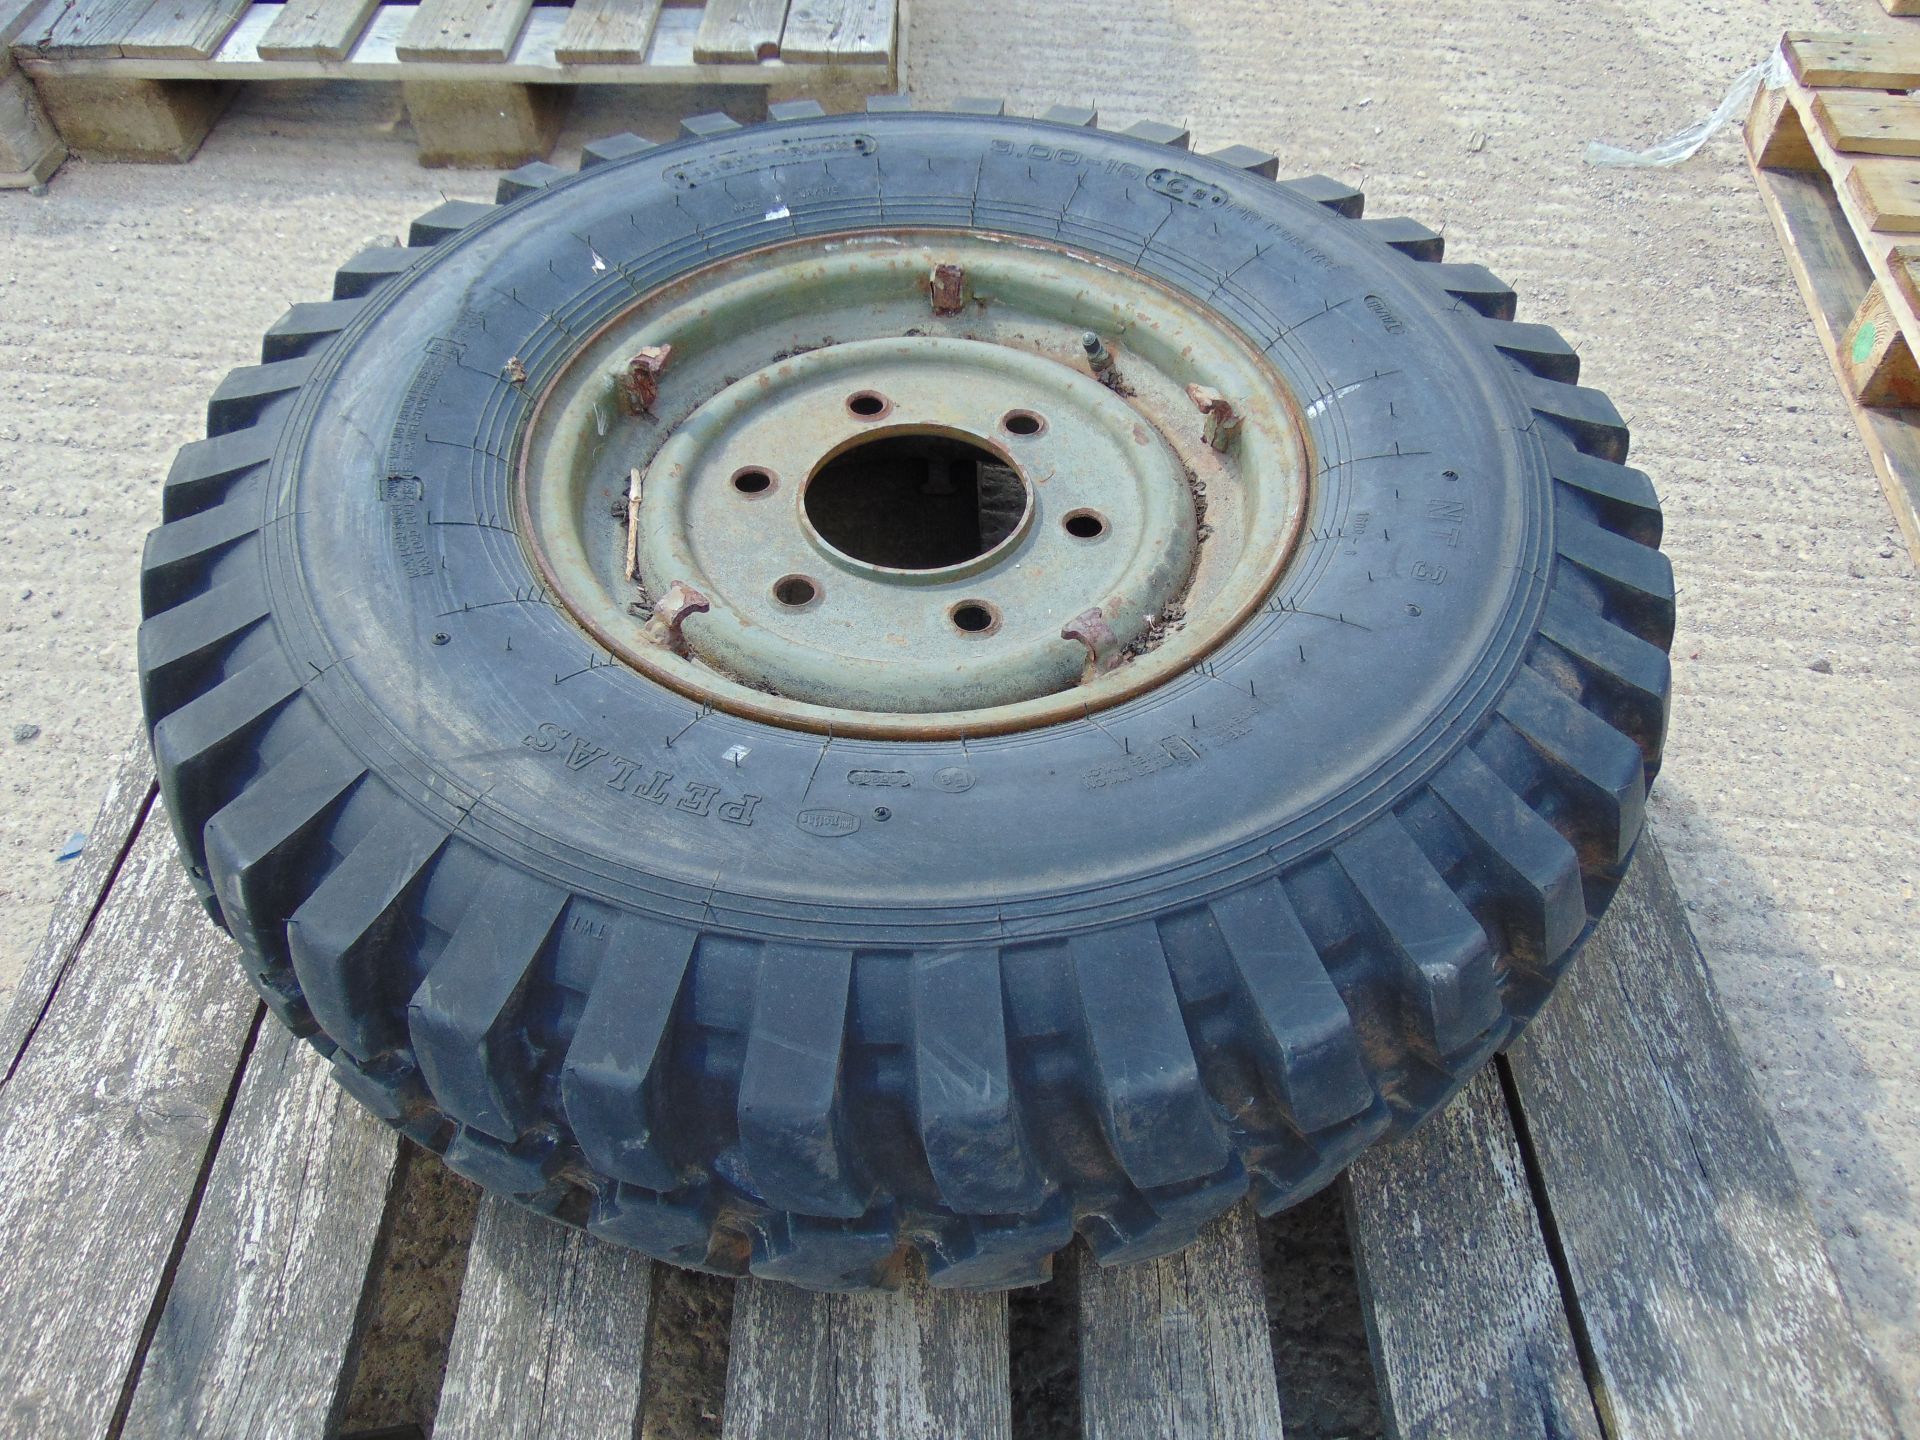 1 x Petlas 9.00 x 16 Tyre complete with 5 stud rim